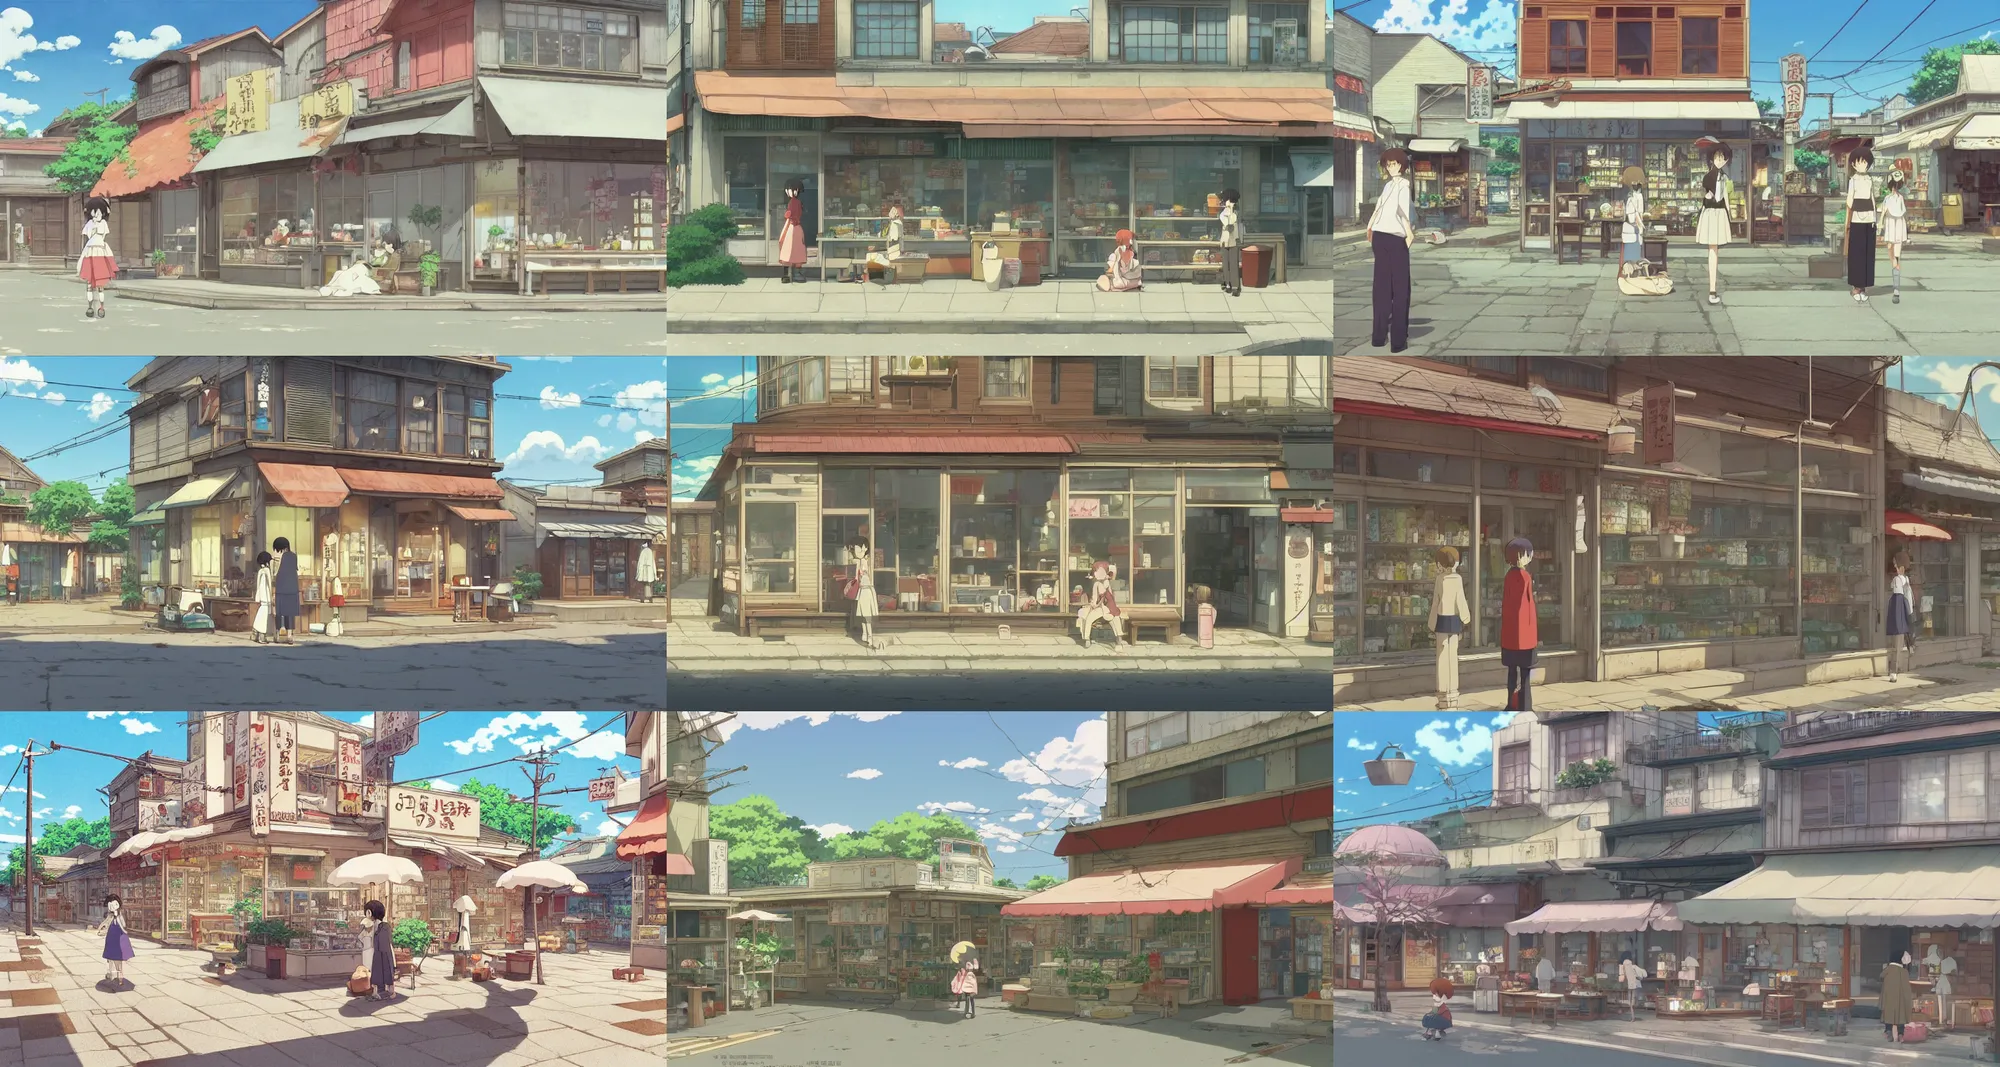 Prompt: beautiful slice of life anime scene of rural storefront, relaxing, calm, cozy, peaceful, by mamoru hosoda, hayao miyazaki, makoto shinkai